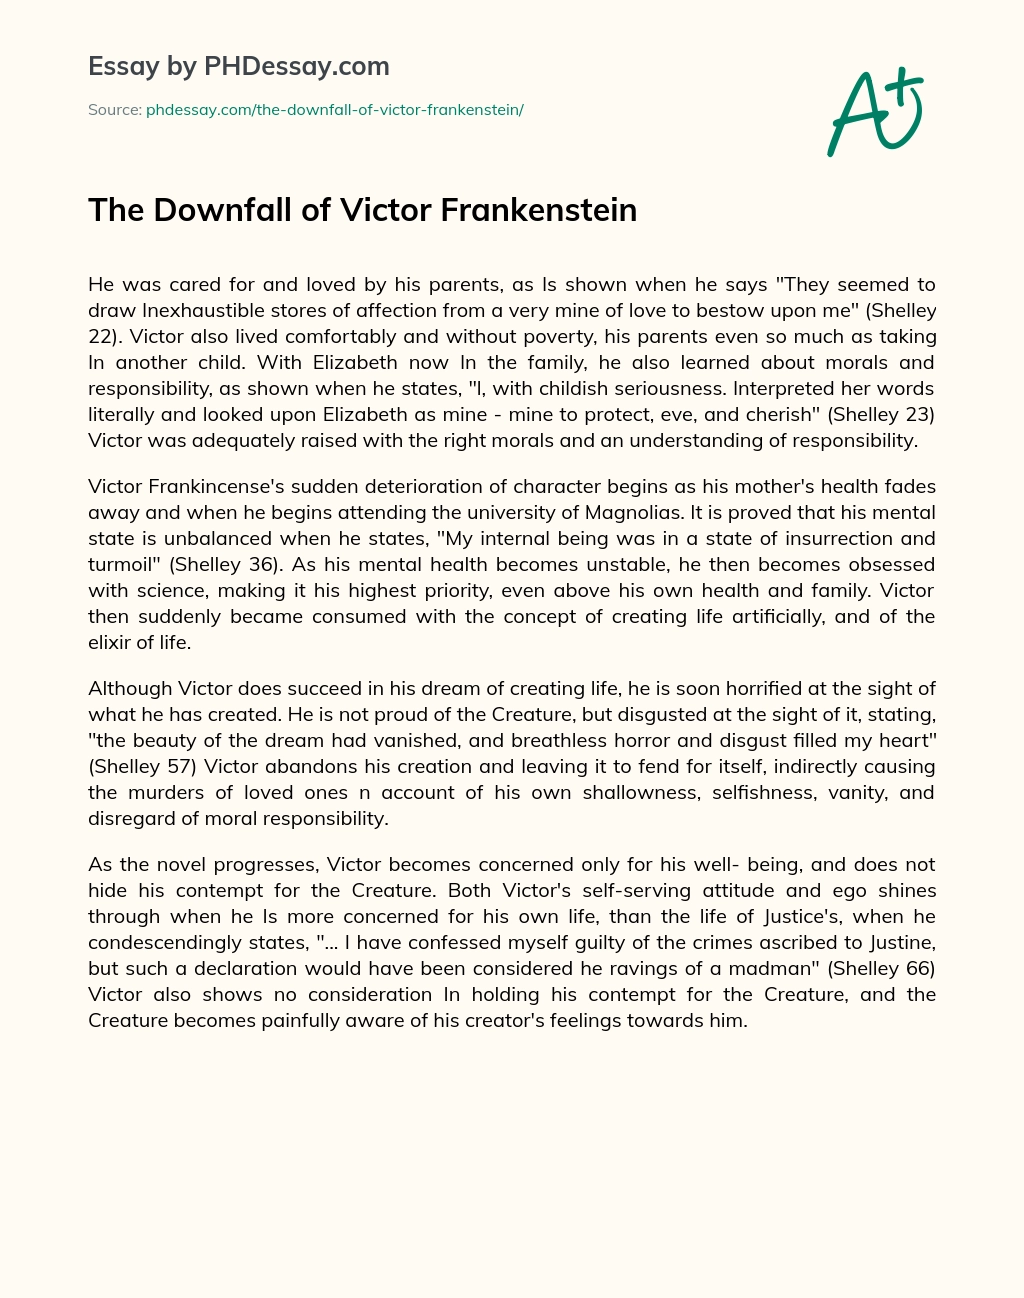 Реферат: The Real Monster Victor Frankenstein Essay